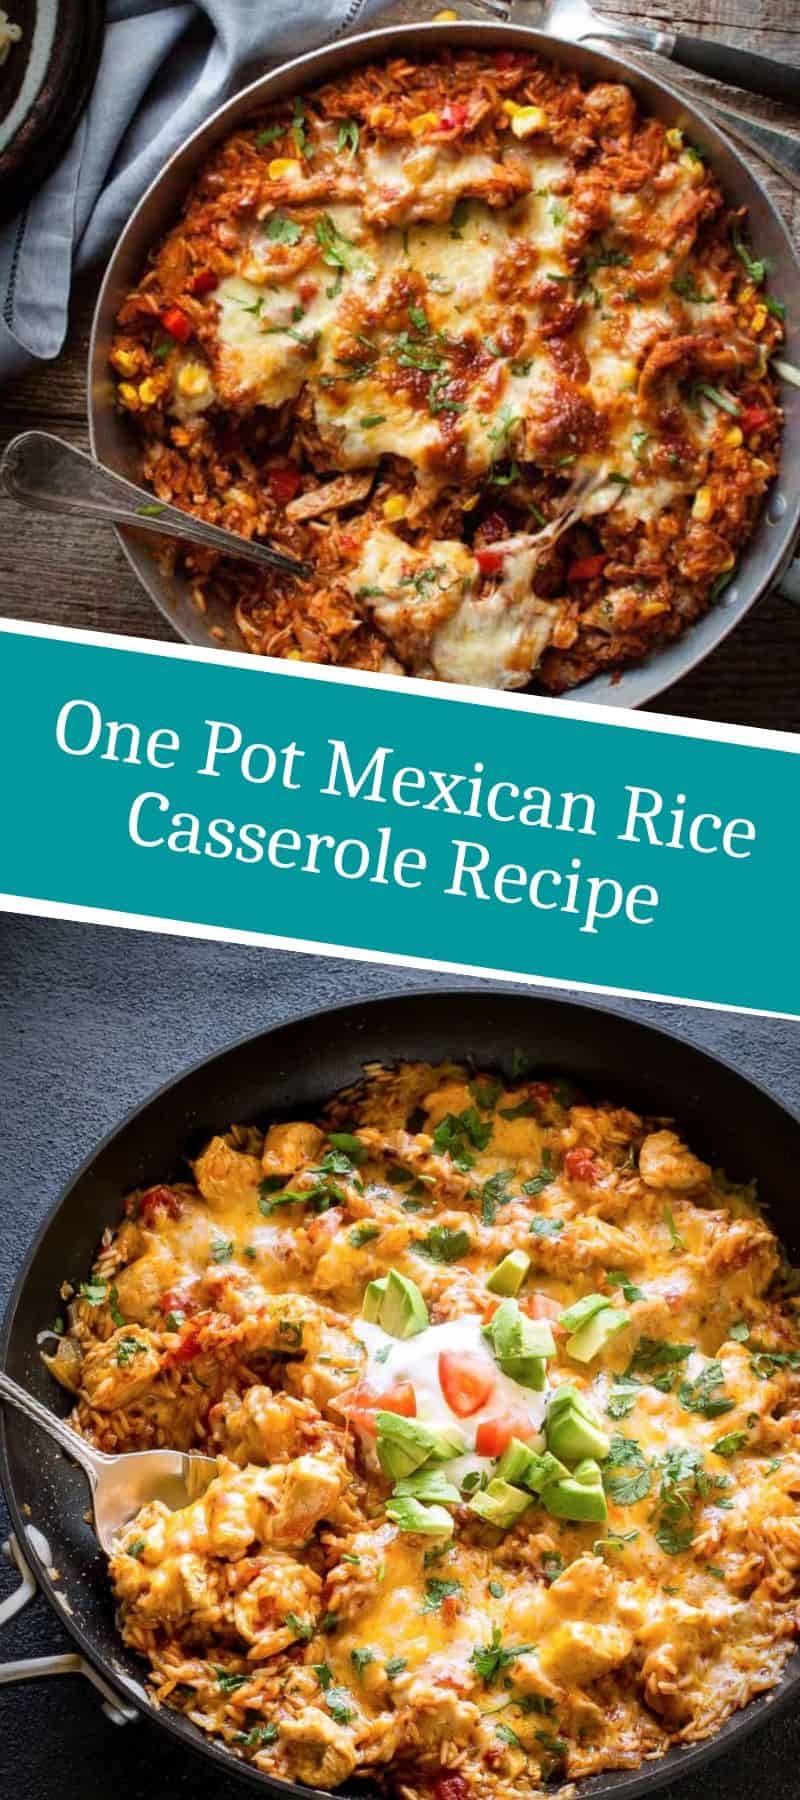 One Pot Mexican Rice Casserole Recipe 3